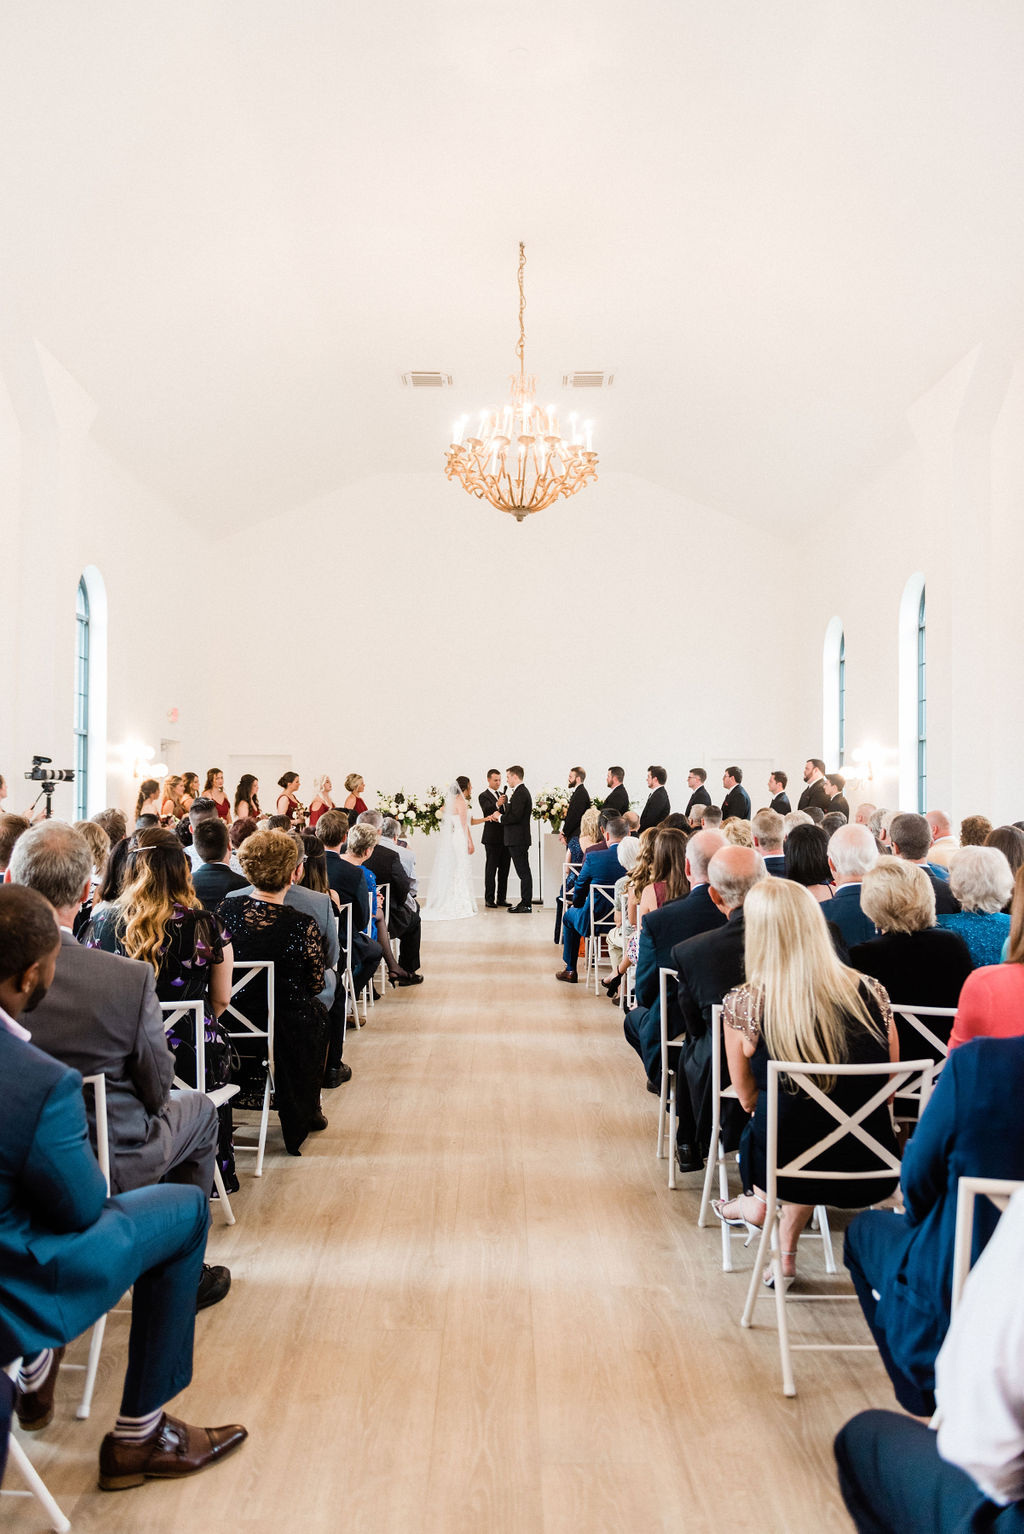 A wedding ceremony at the Loft 310 Chapel in Kalamazoo, Michigan